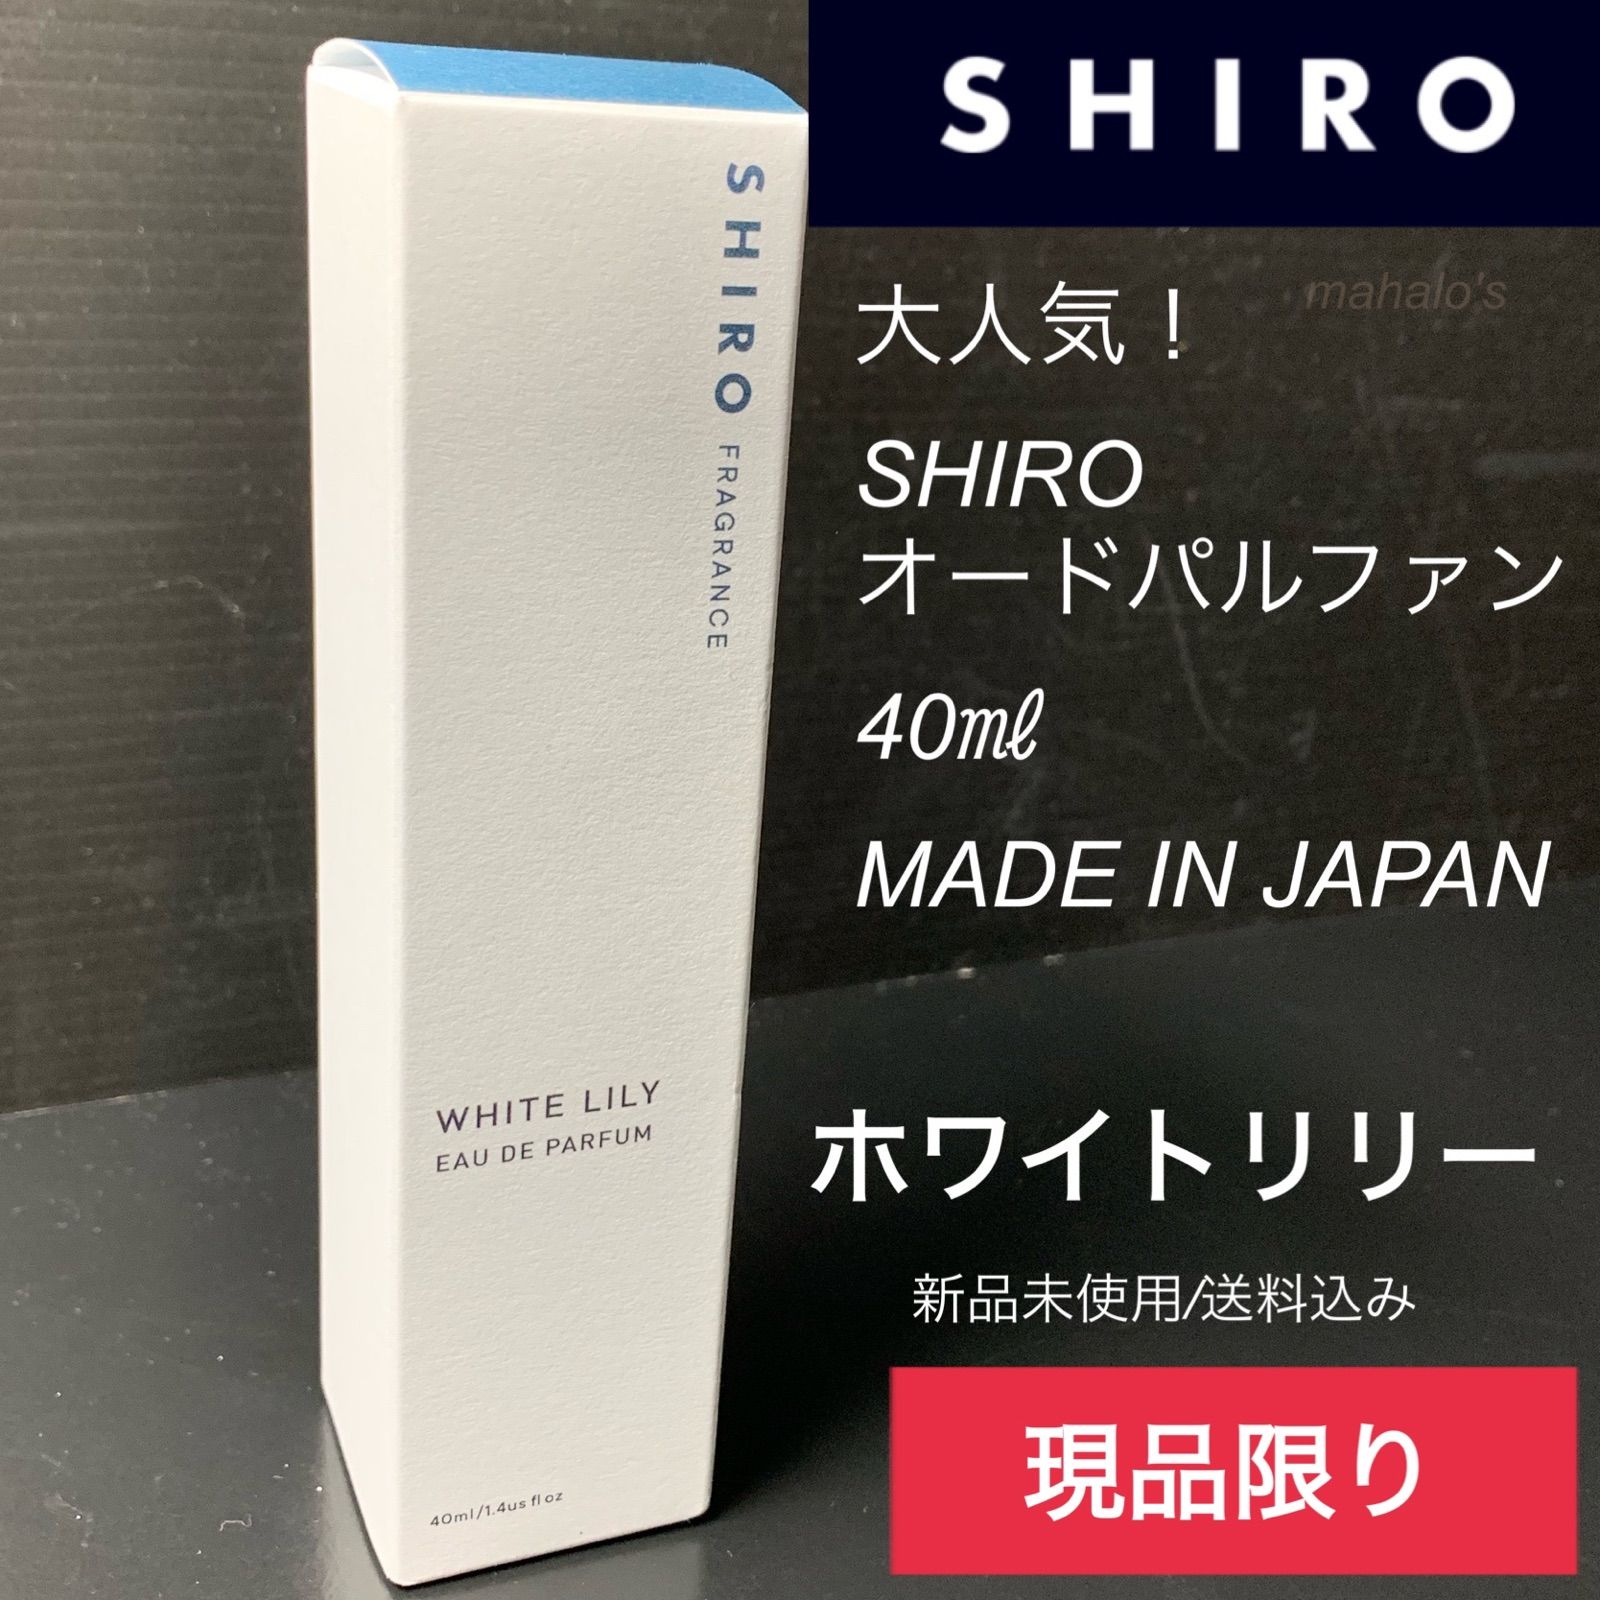 SHIRO 　オードパルファン　40ml 　ホワイトリリー　箱付き